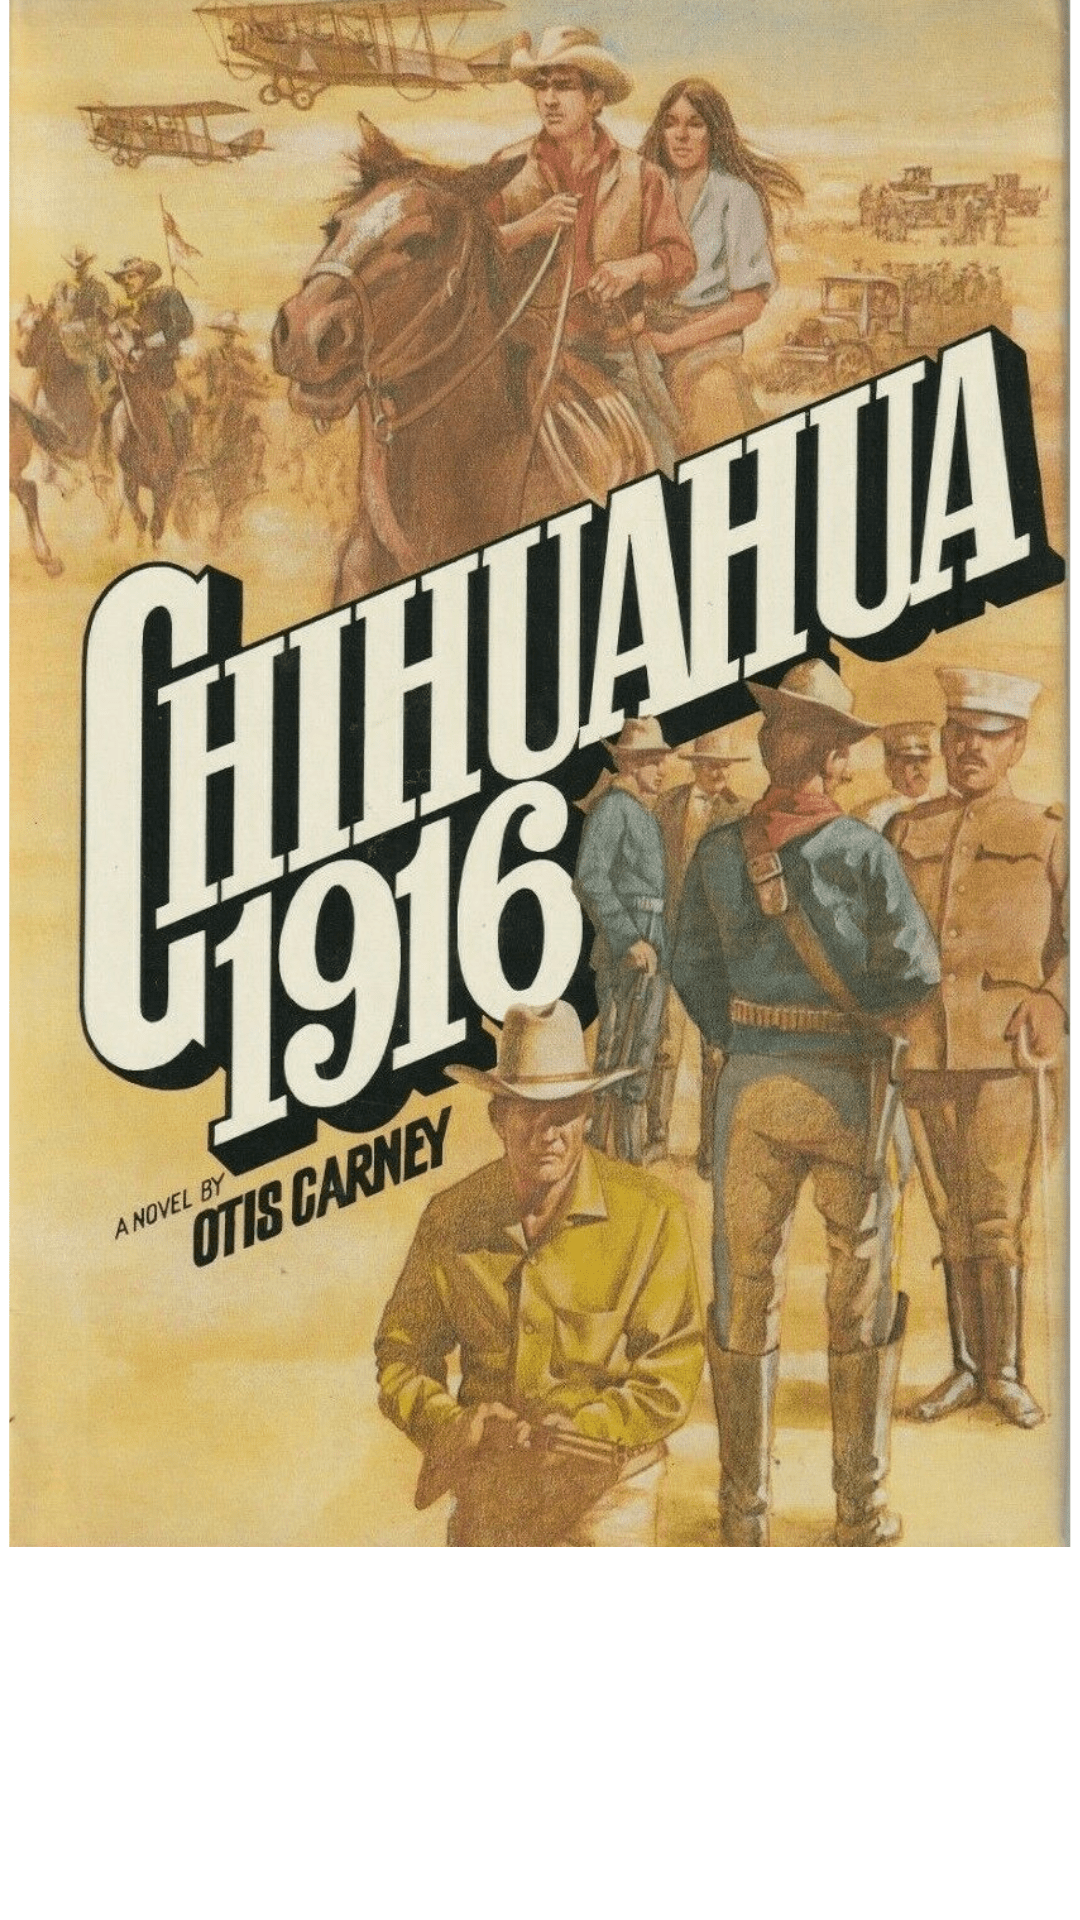 Chihuahua 1916